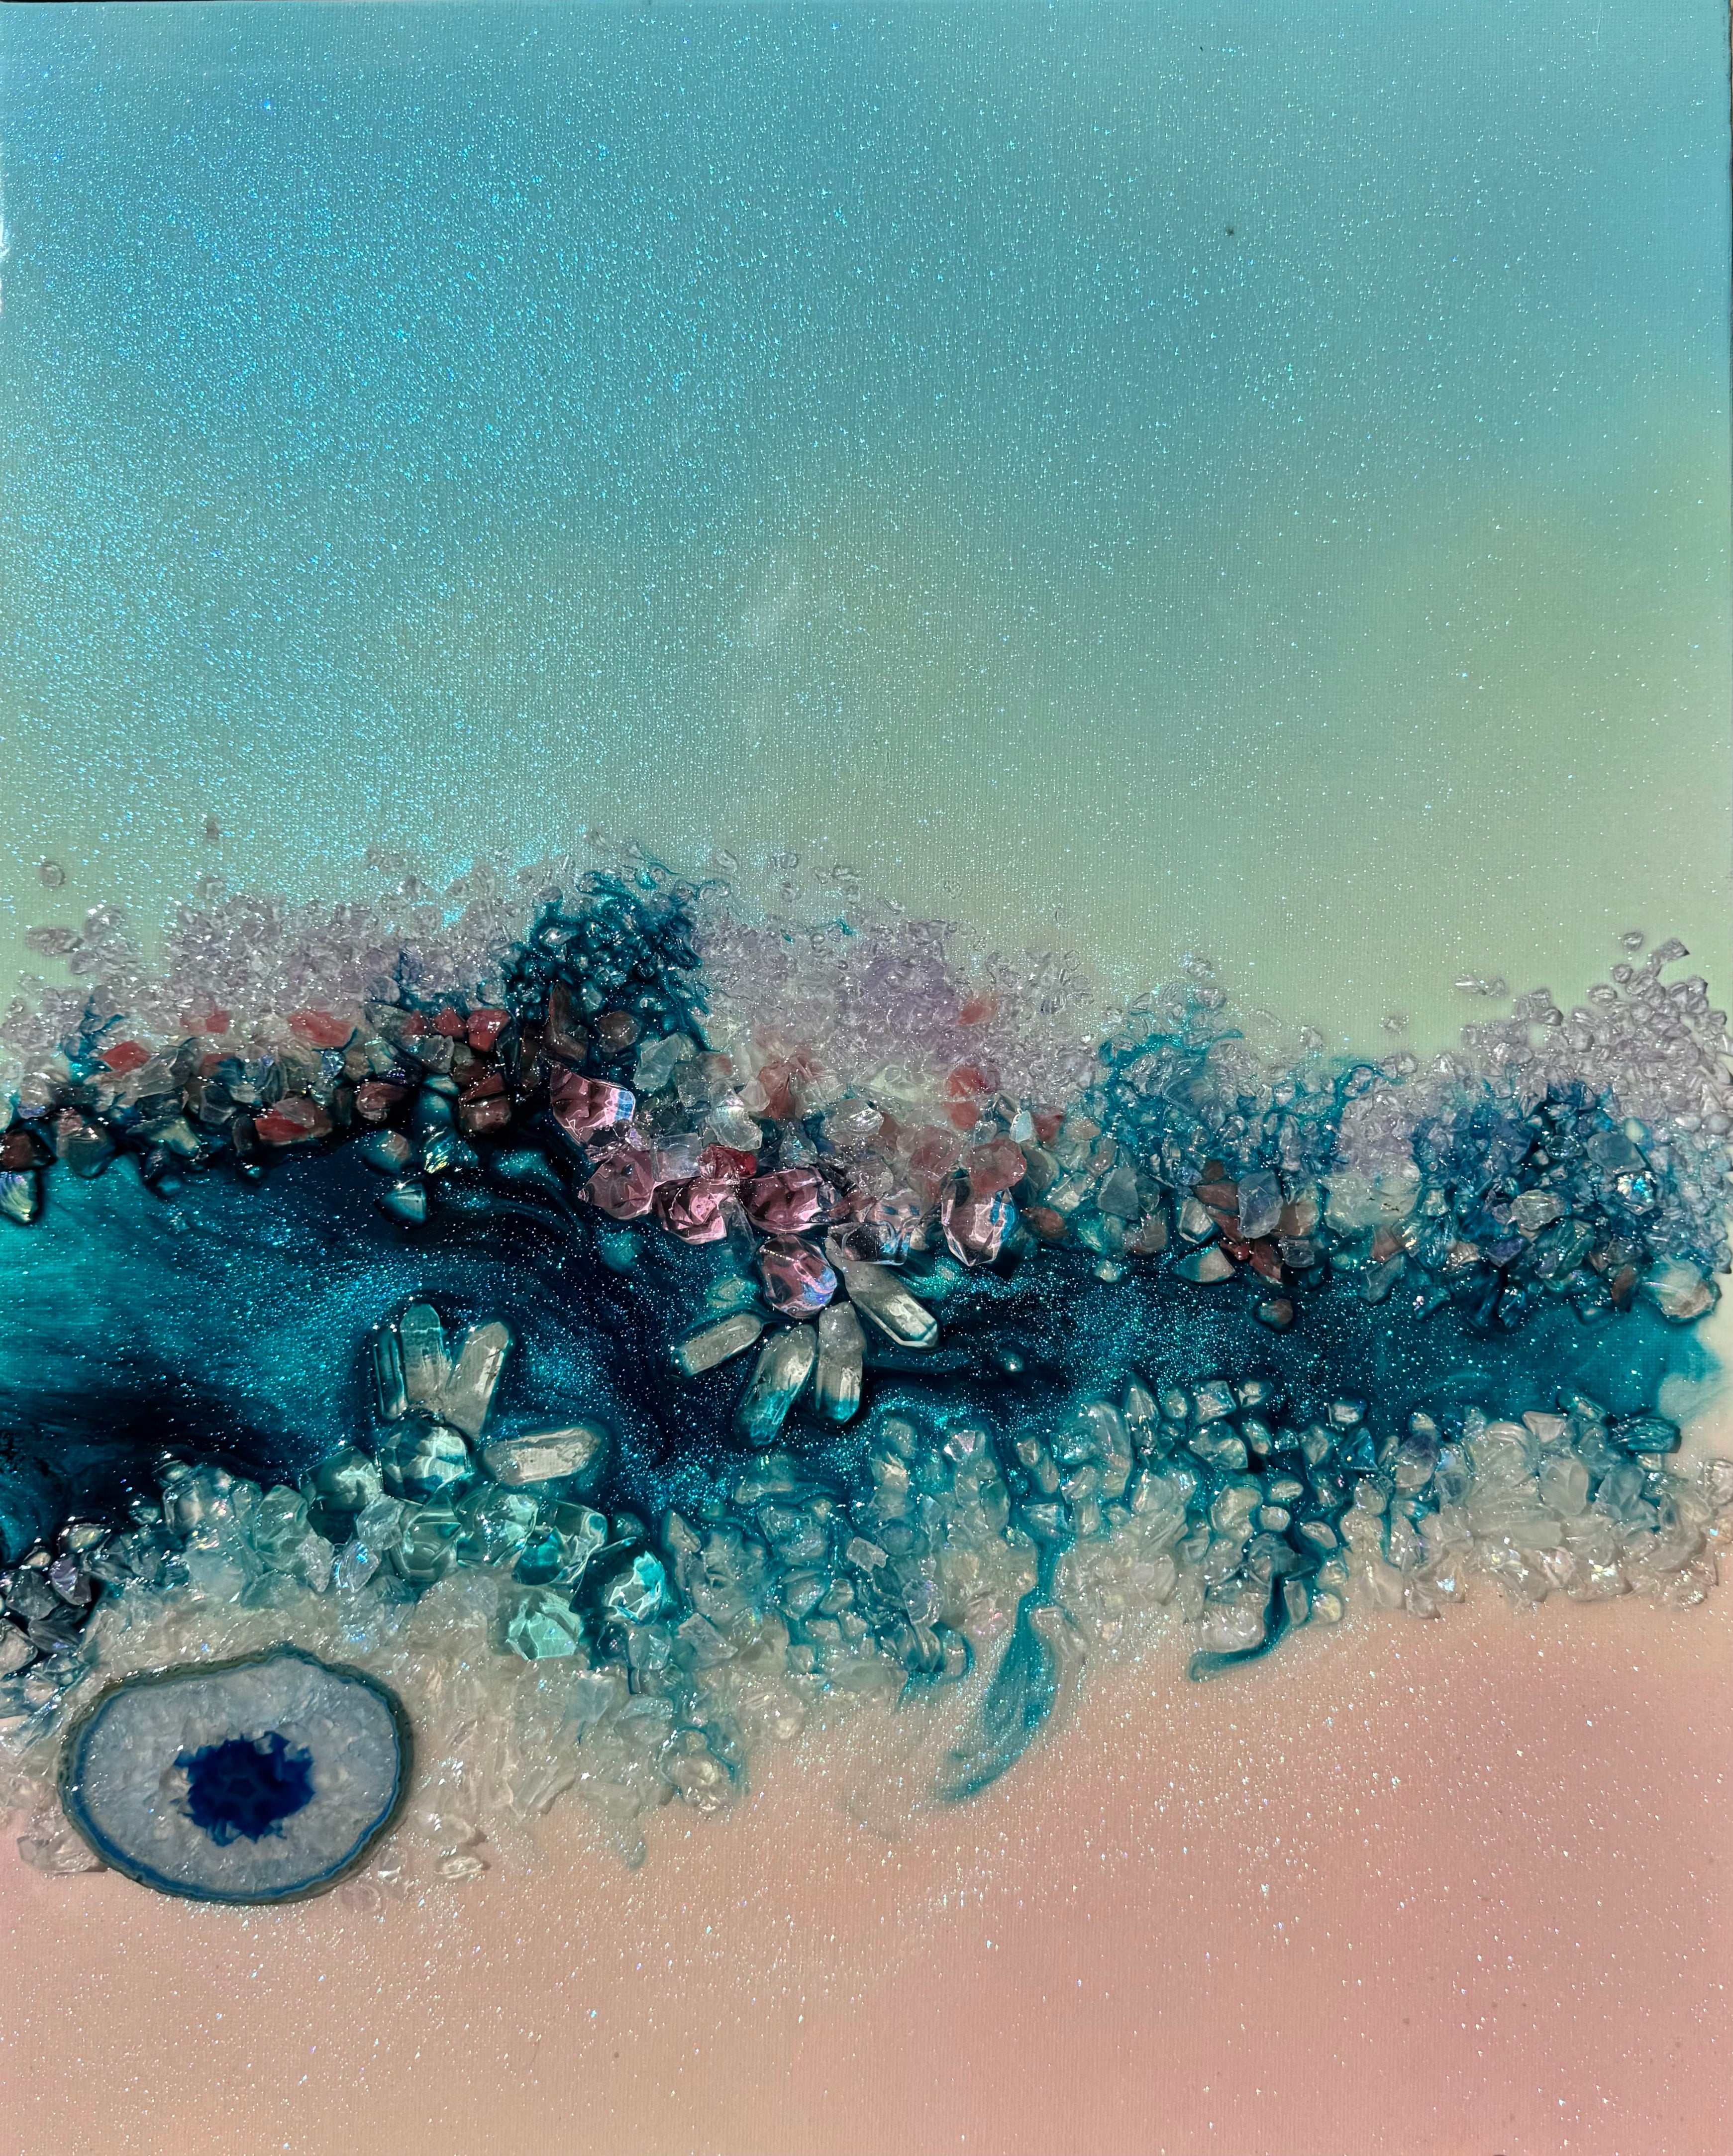 Heart Reef Bliss Set of 2 with Swarovski, Amethyst, Agate, Quartz & Epoxy Glass on Canvas 40x50cm